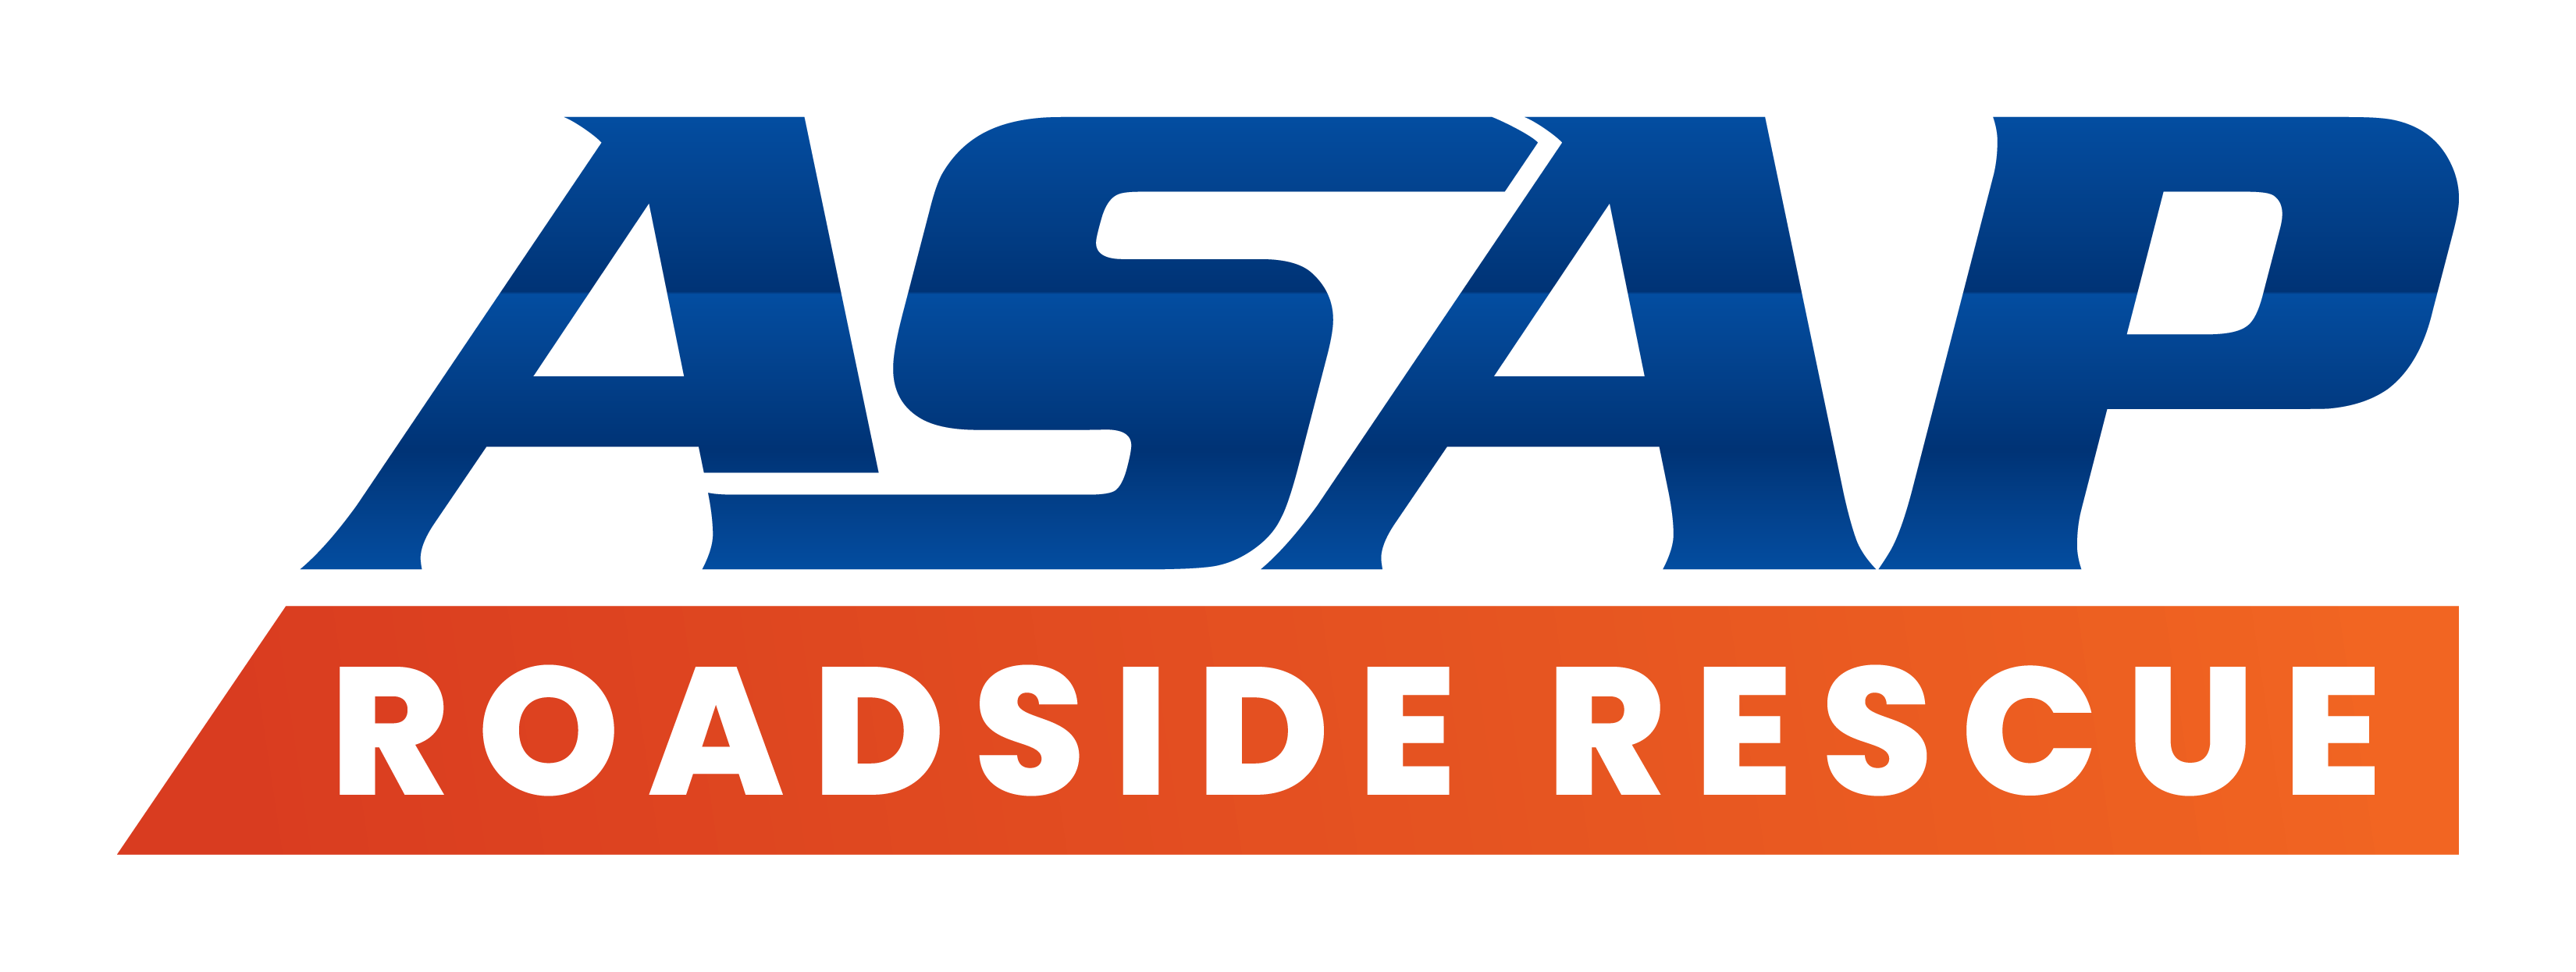 ASAP Roadside Rescue LLC